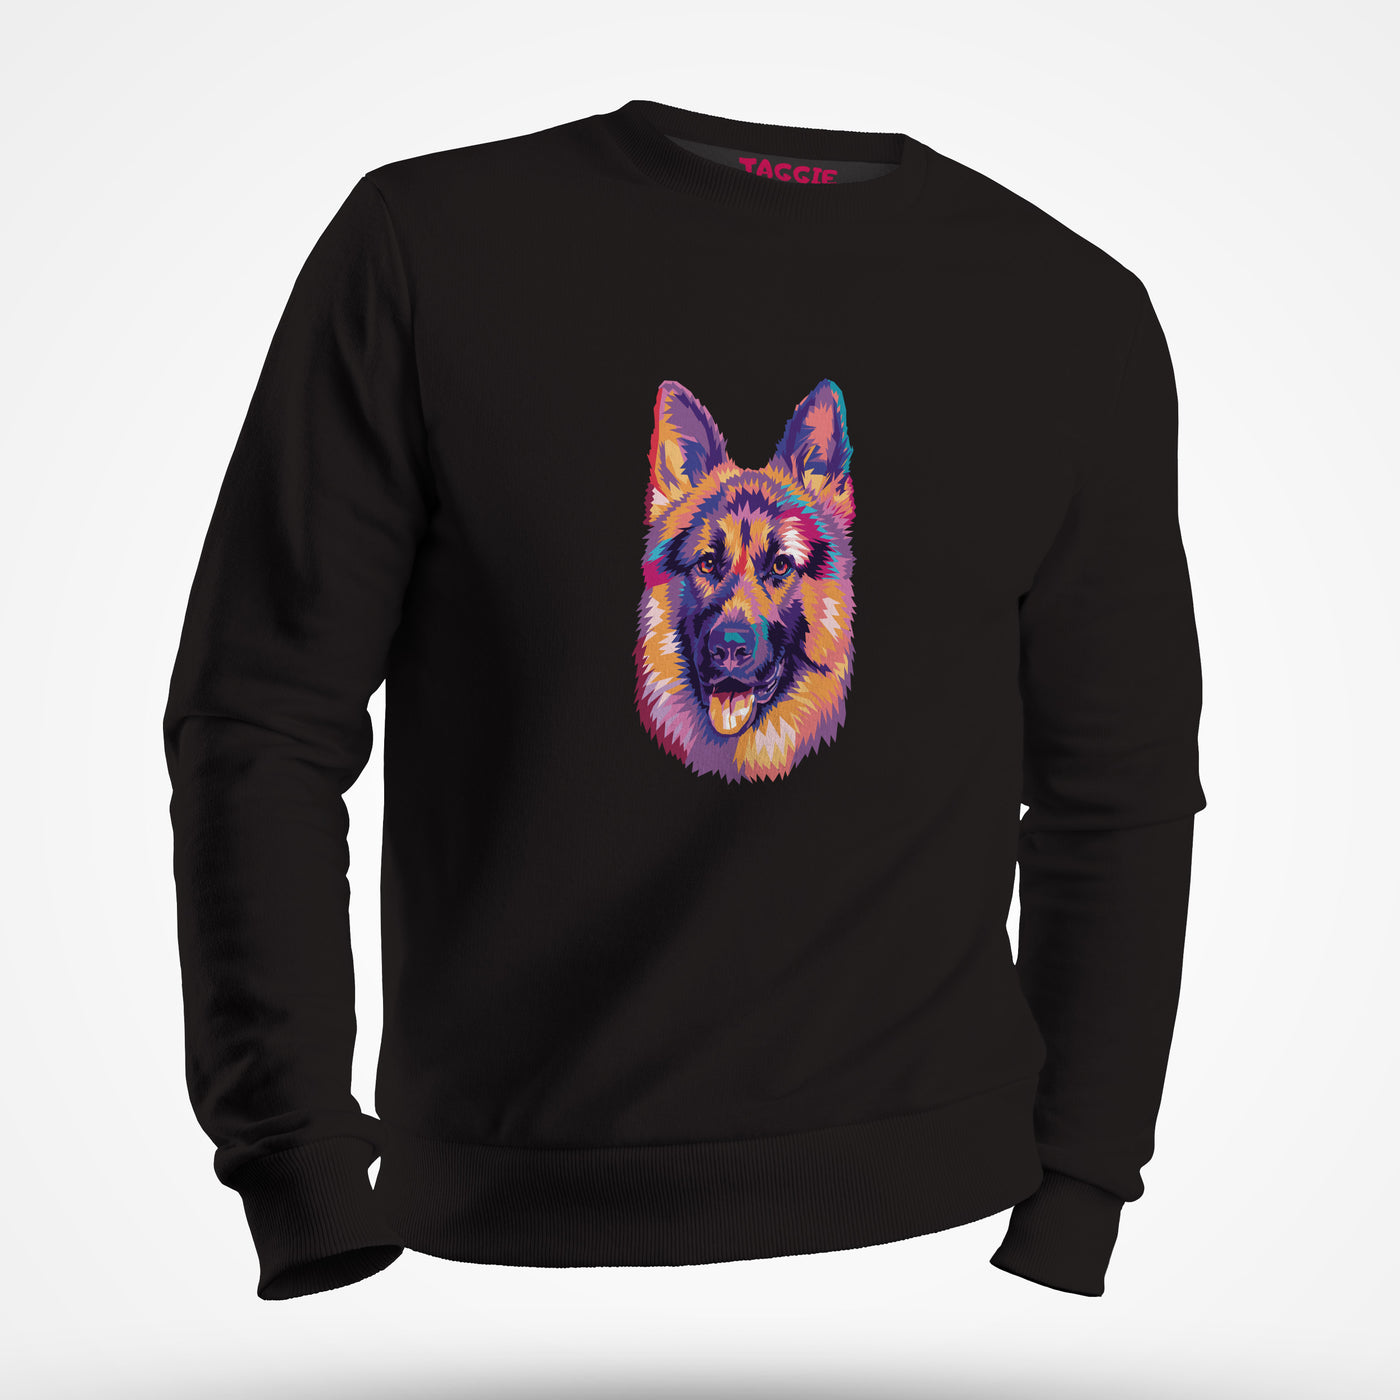 German Shepherd Art Sweatshirt